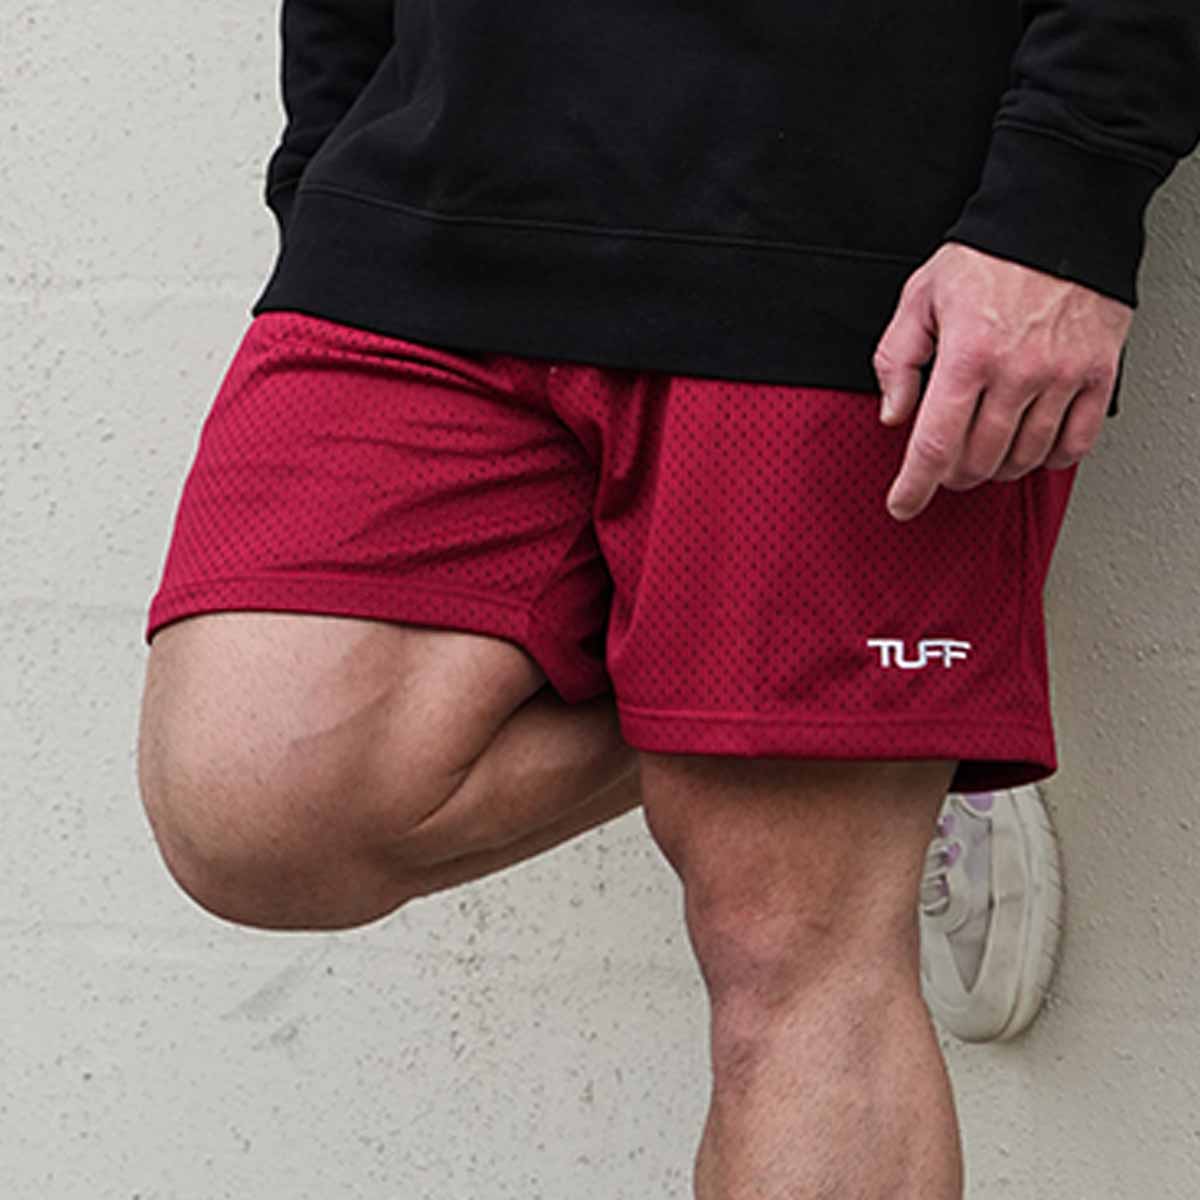 Size XXL Tuff athletics shorts